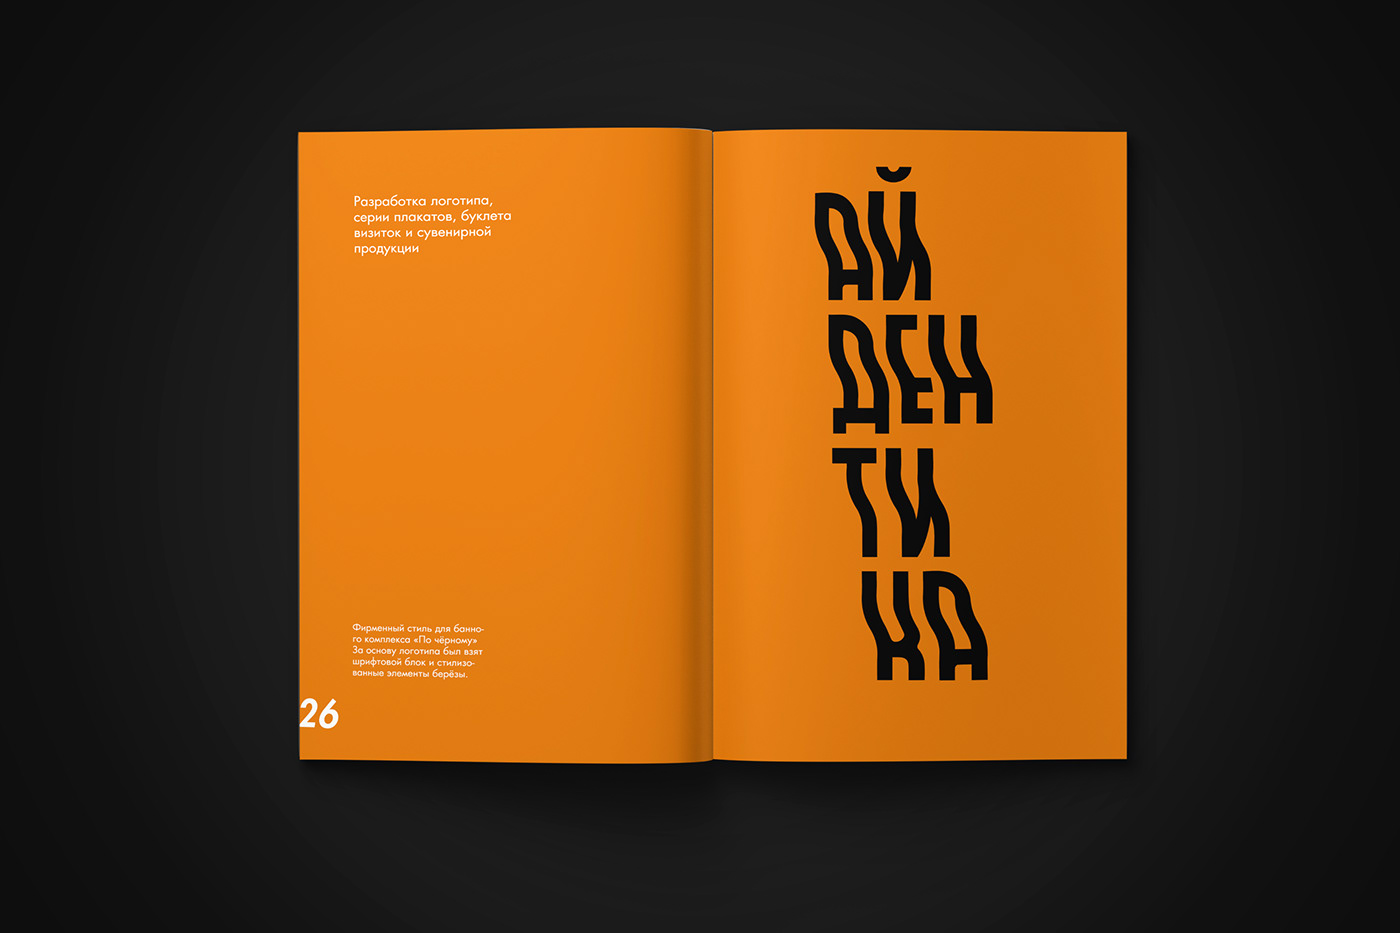 design graphic design  Layout magazine portfolio Resume type typography   графический дизайн портфолио